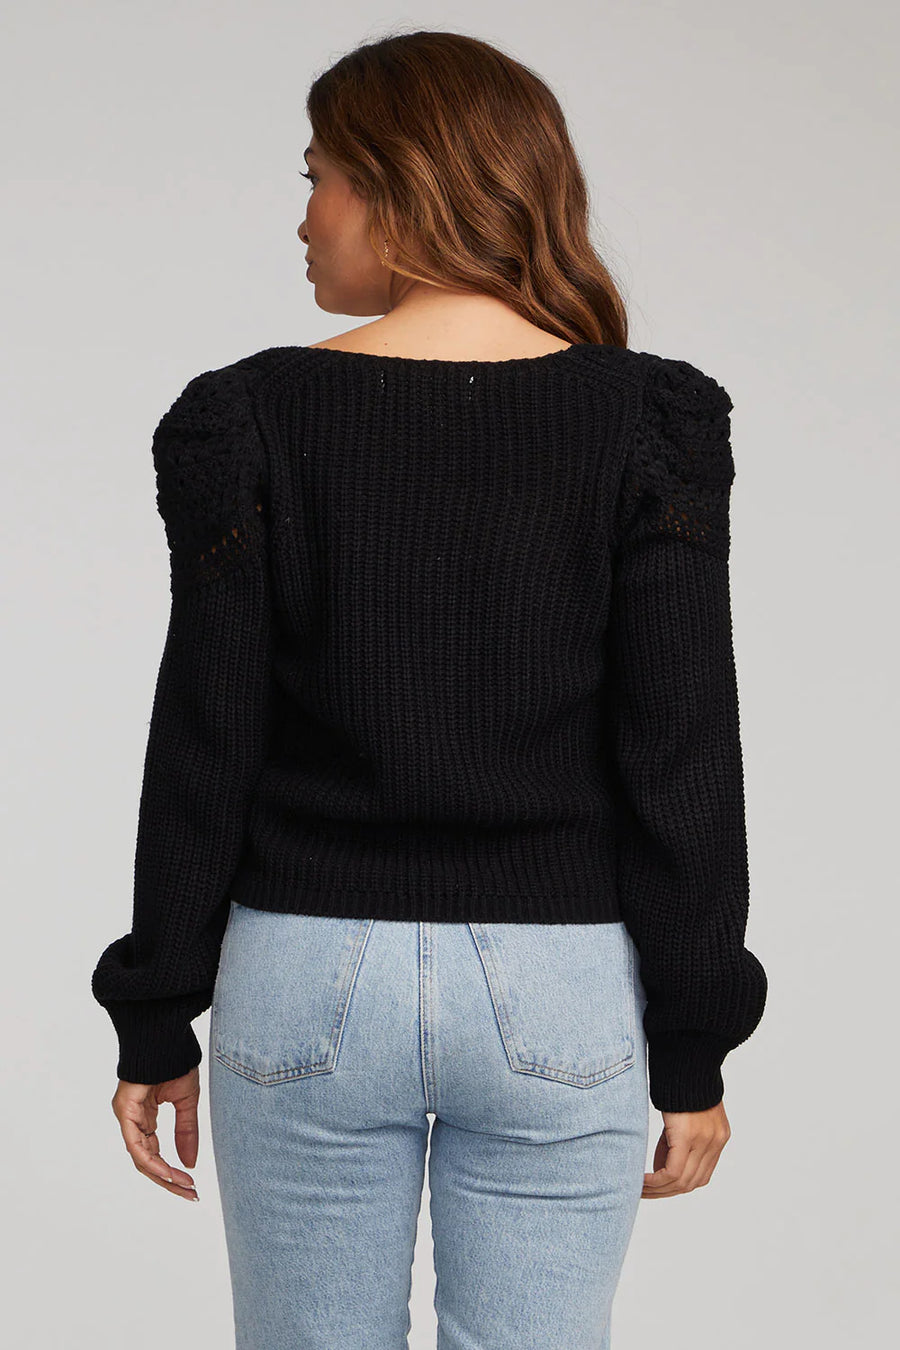 Corrine Sweater